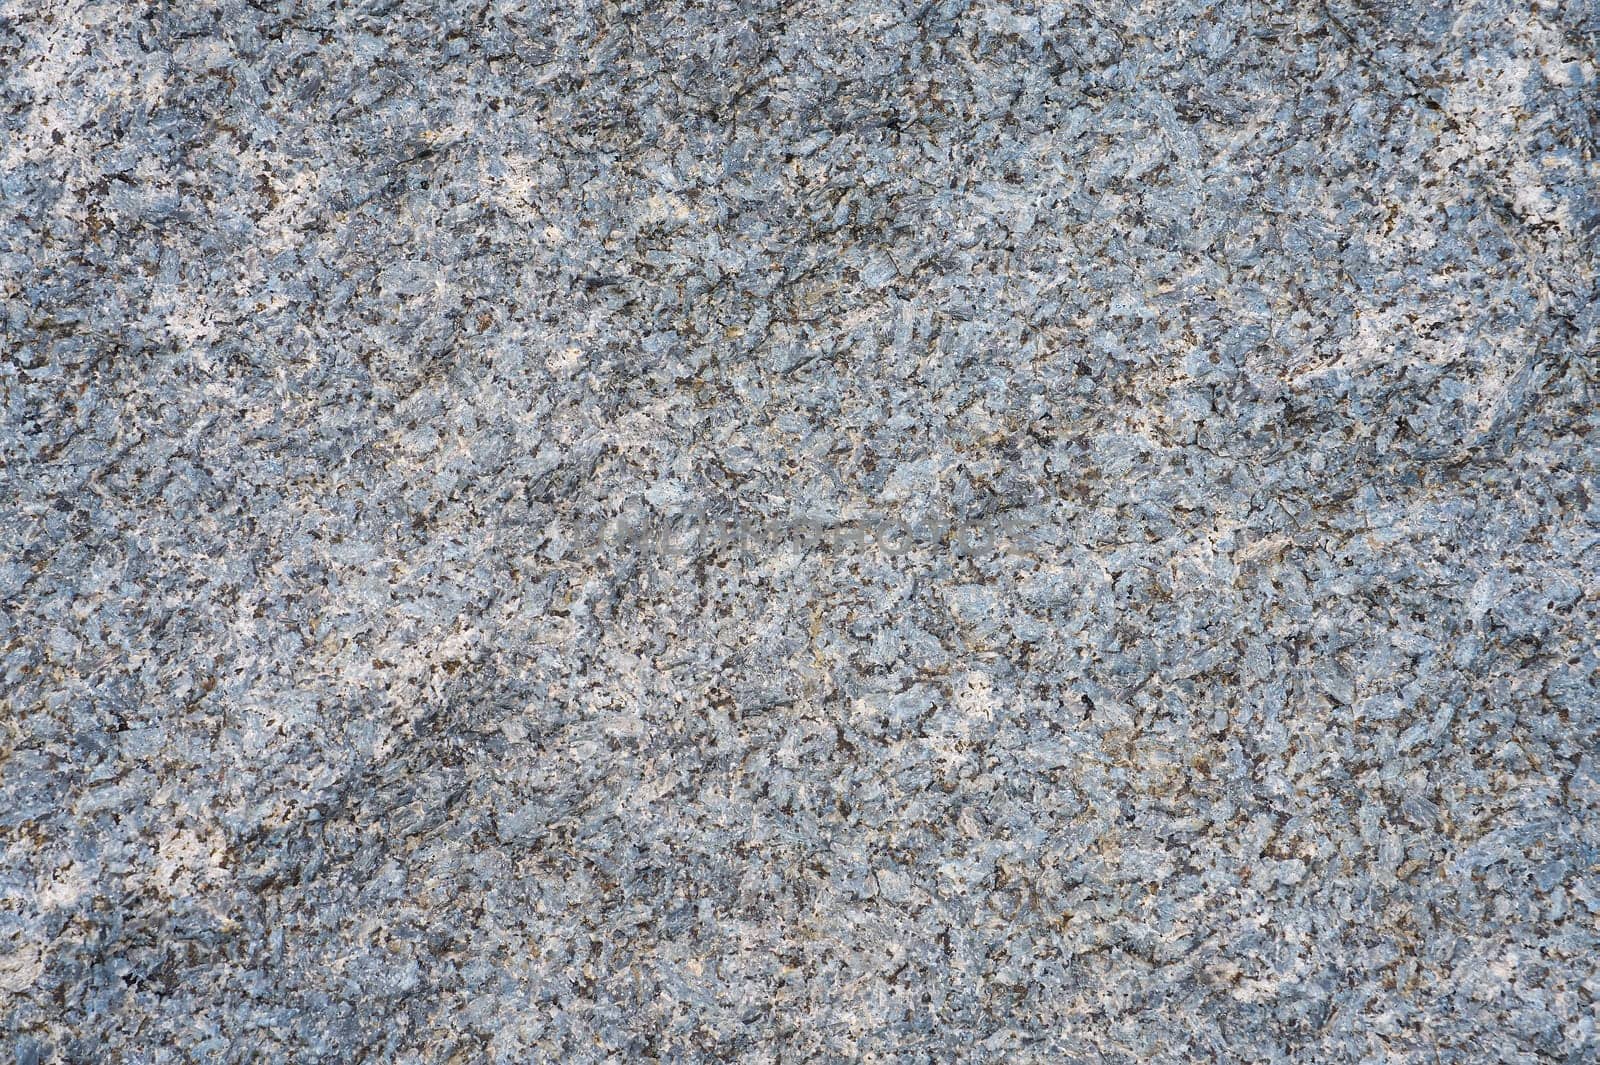 Granite texture, granite background with natural pattern. Natural granite stone. Red, gray and white granite stone texture